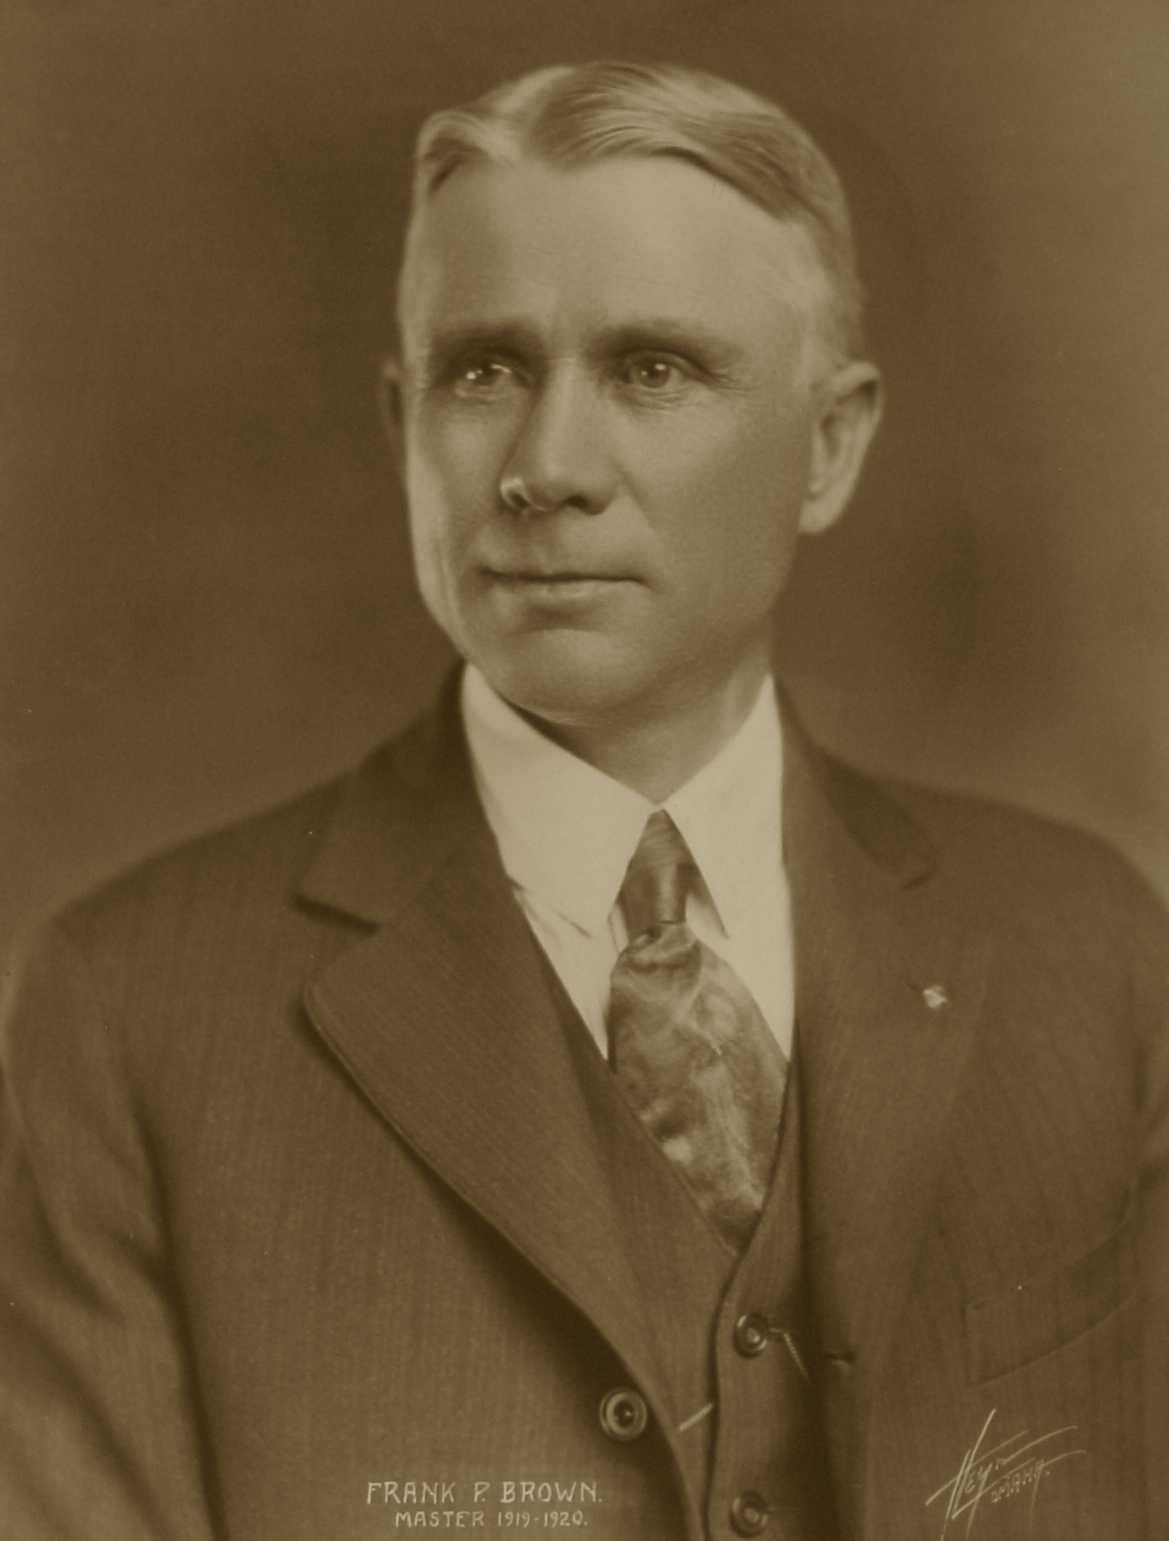 Frank P. Brown, 1919-1920